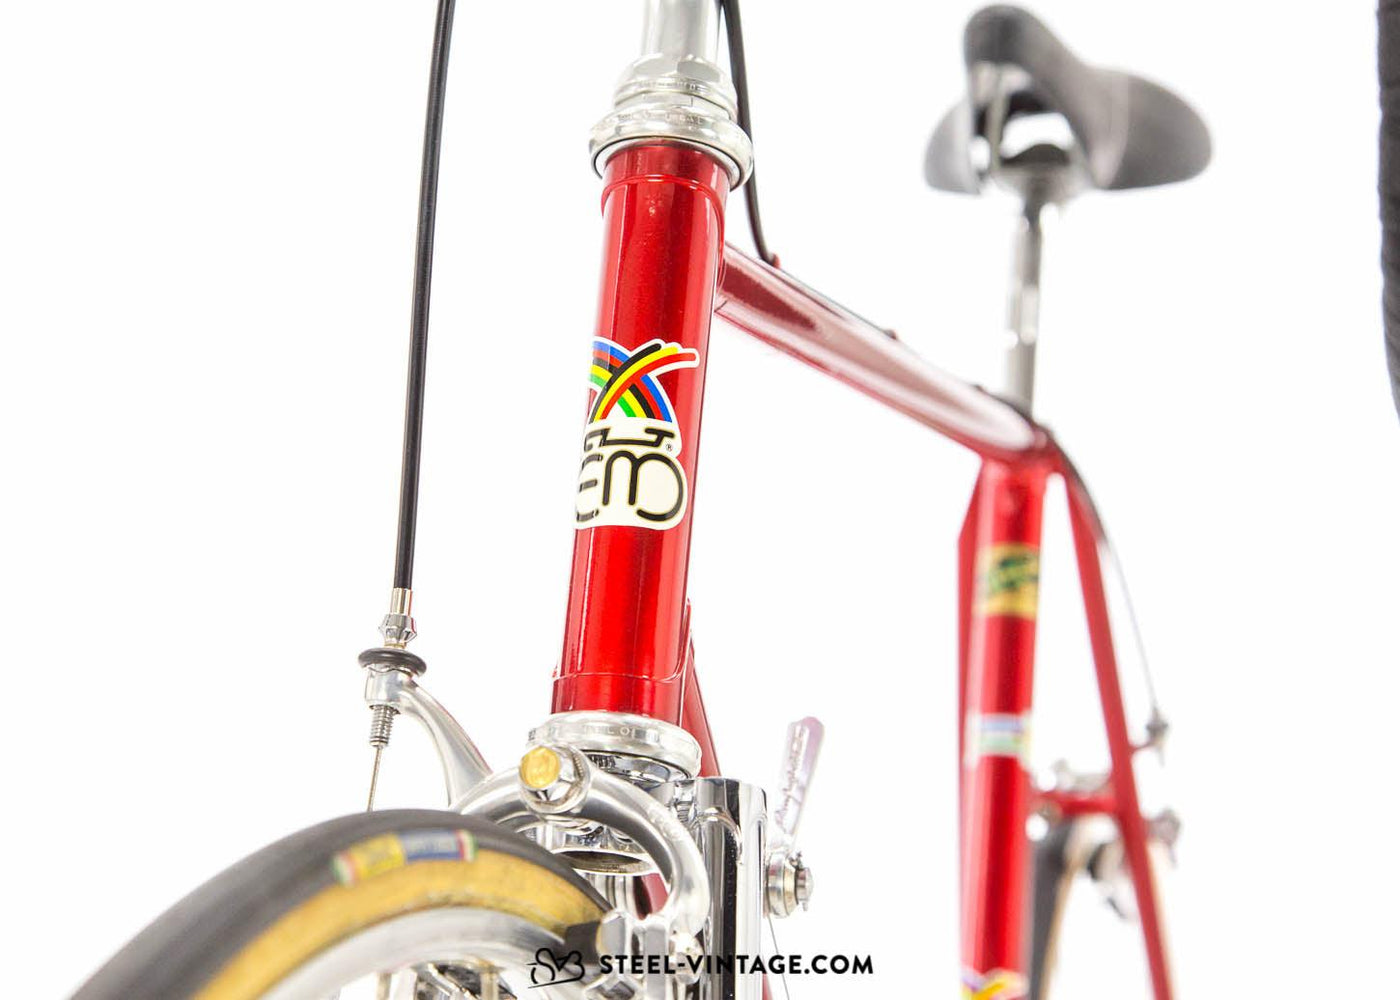 Eddy Merckx Professional Campagnolo Anniversary Bike 1983 - Steel Vintage Bikes